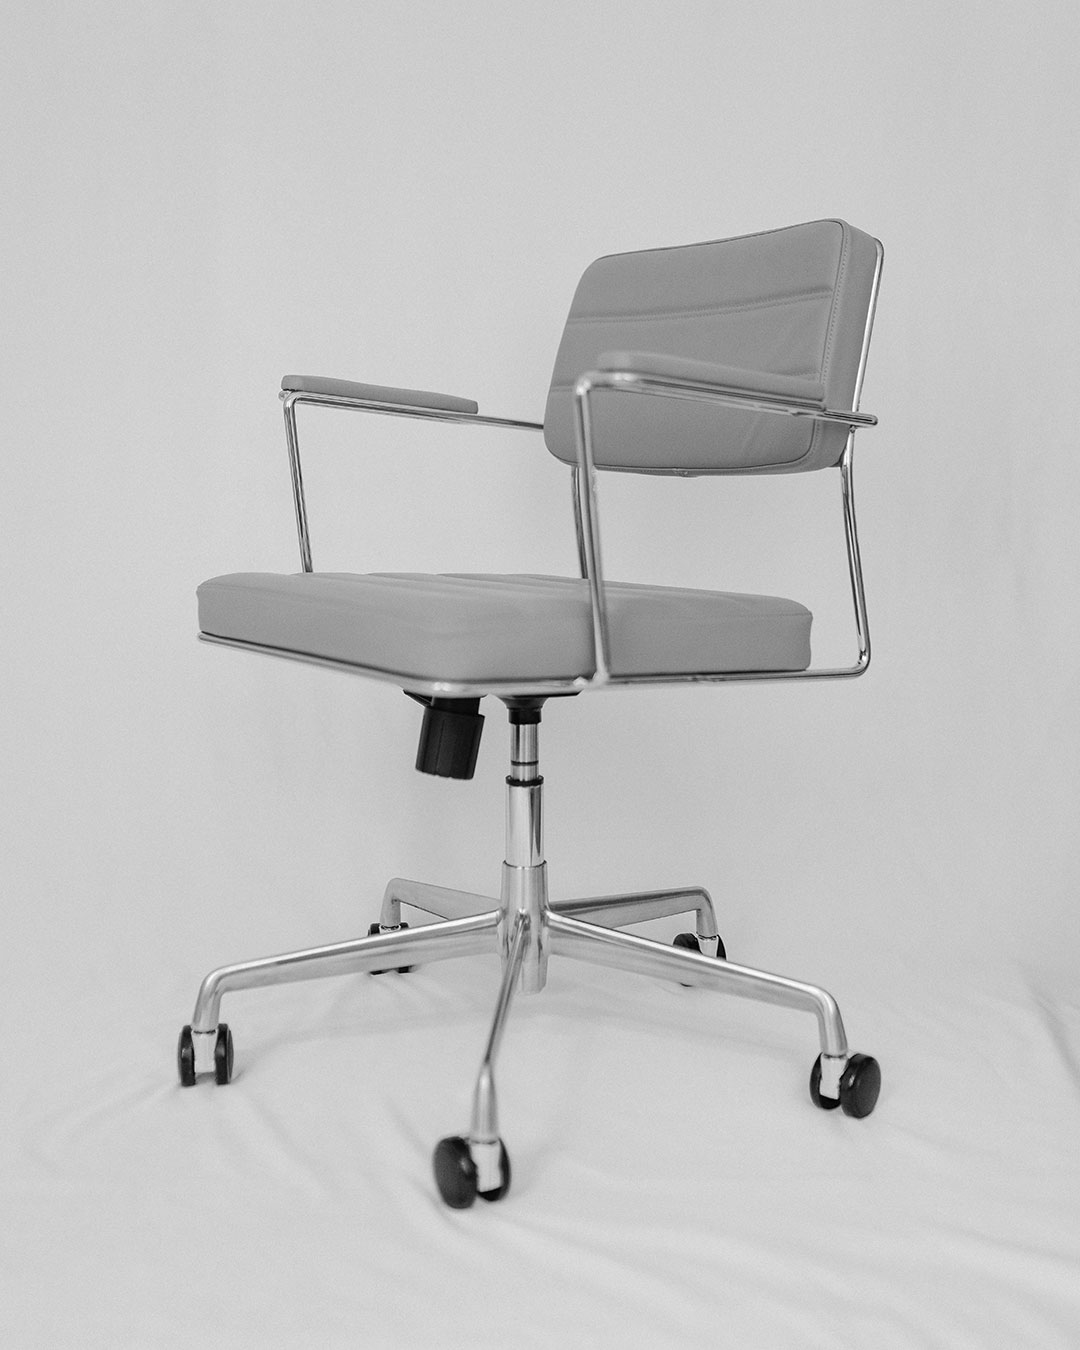 Bürostuhl in Schwarz-Weiß fotografiert.